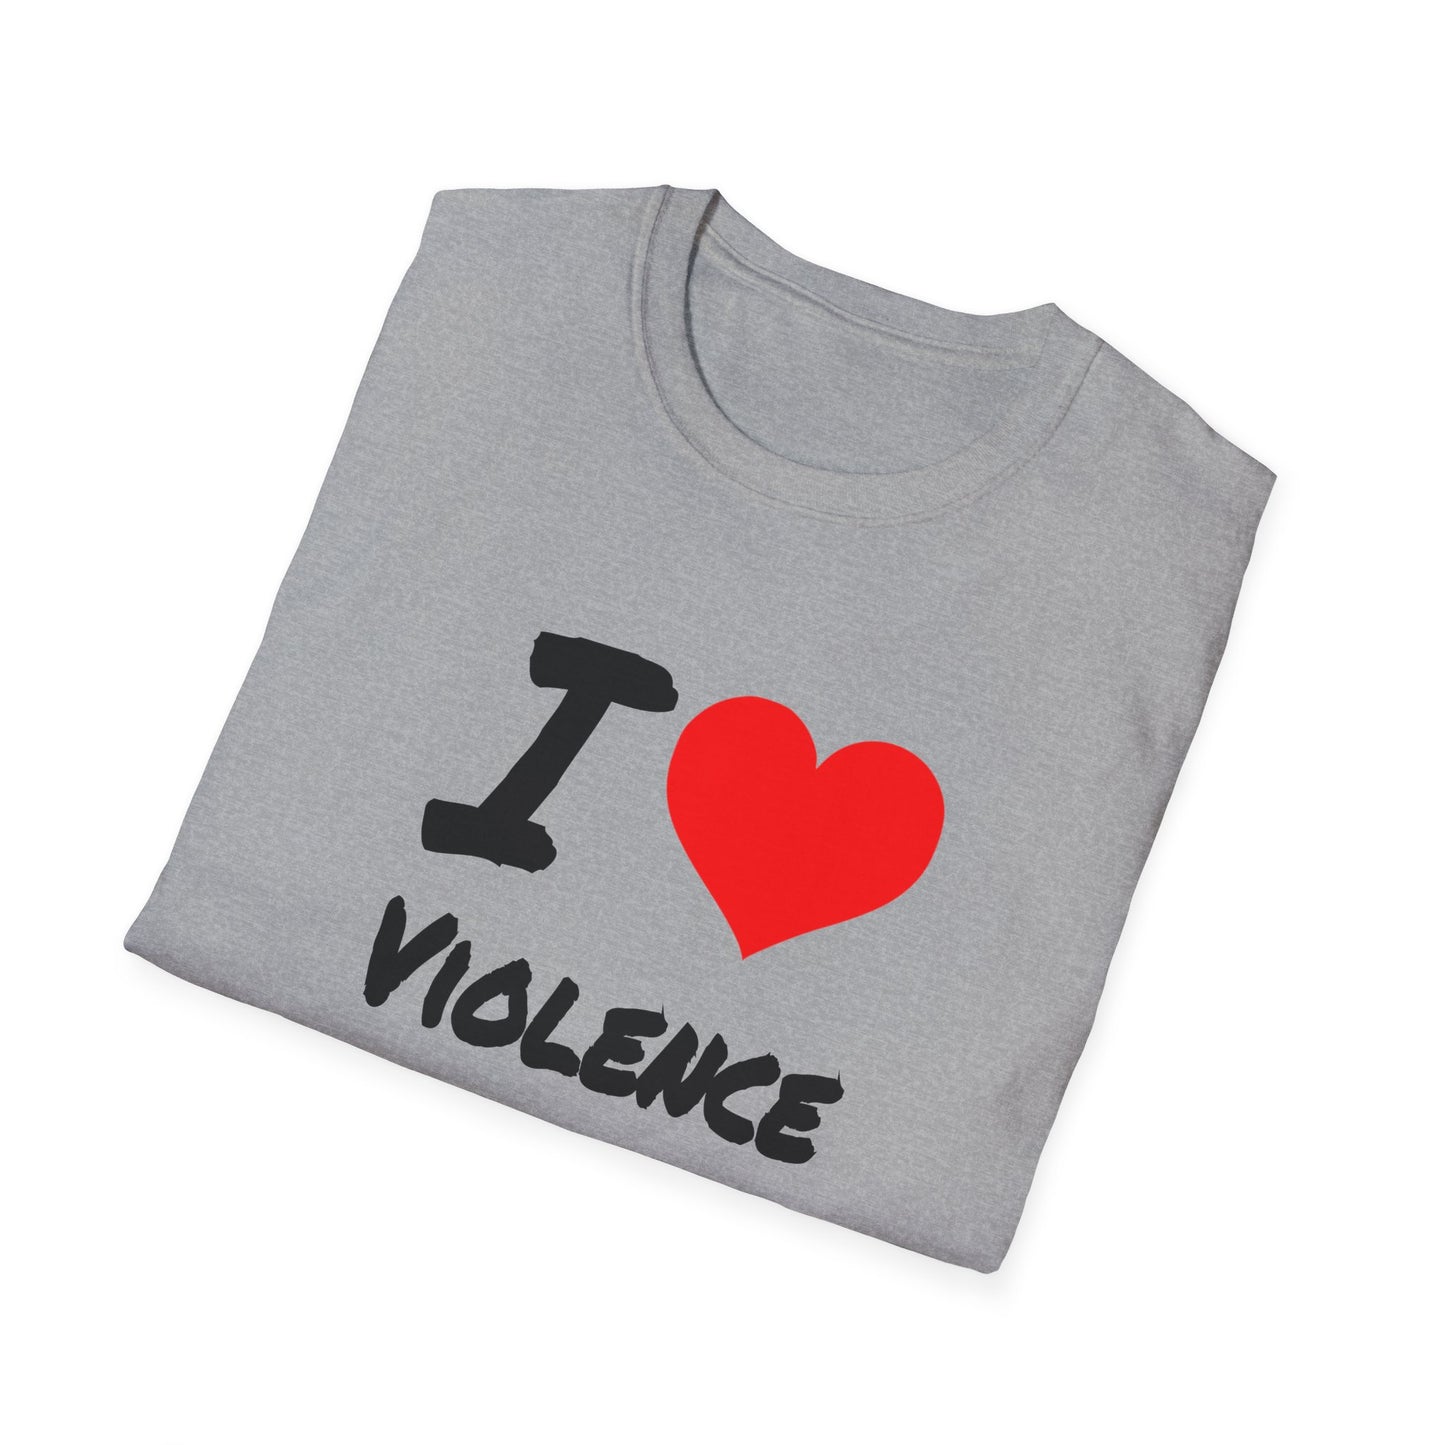 I Love Violence - T-Shirt